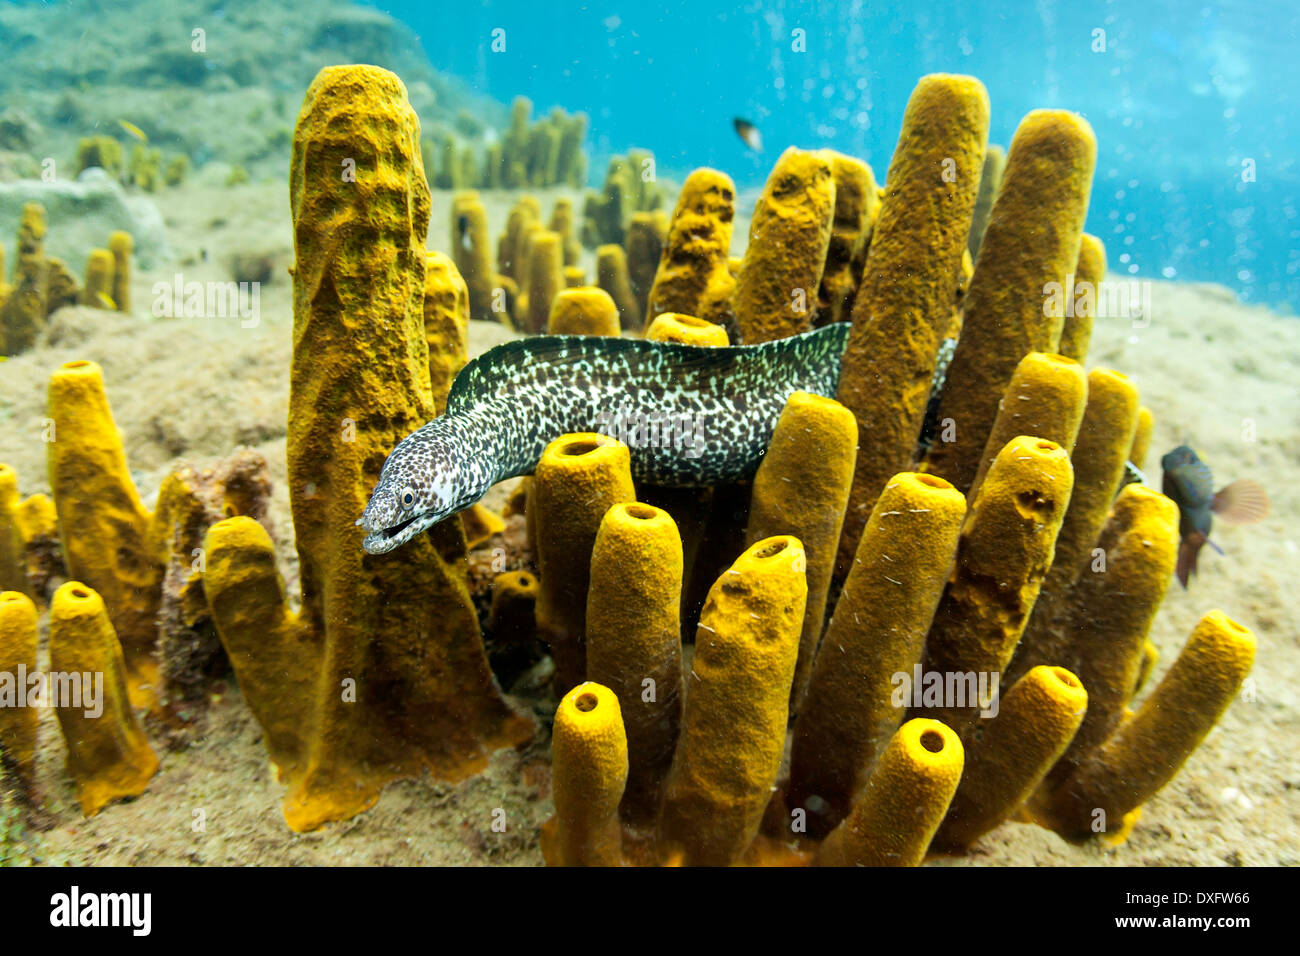 Spotted moray eel, Gymnothorax moringa, Mar dei Caraibi, Dominica Foto Stock